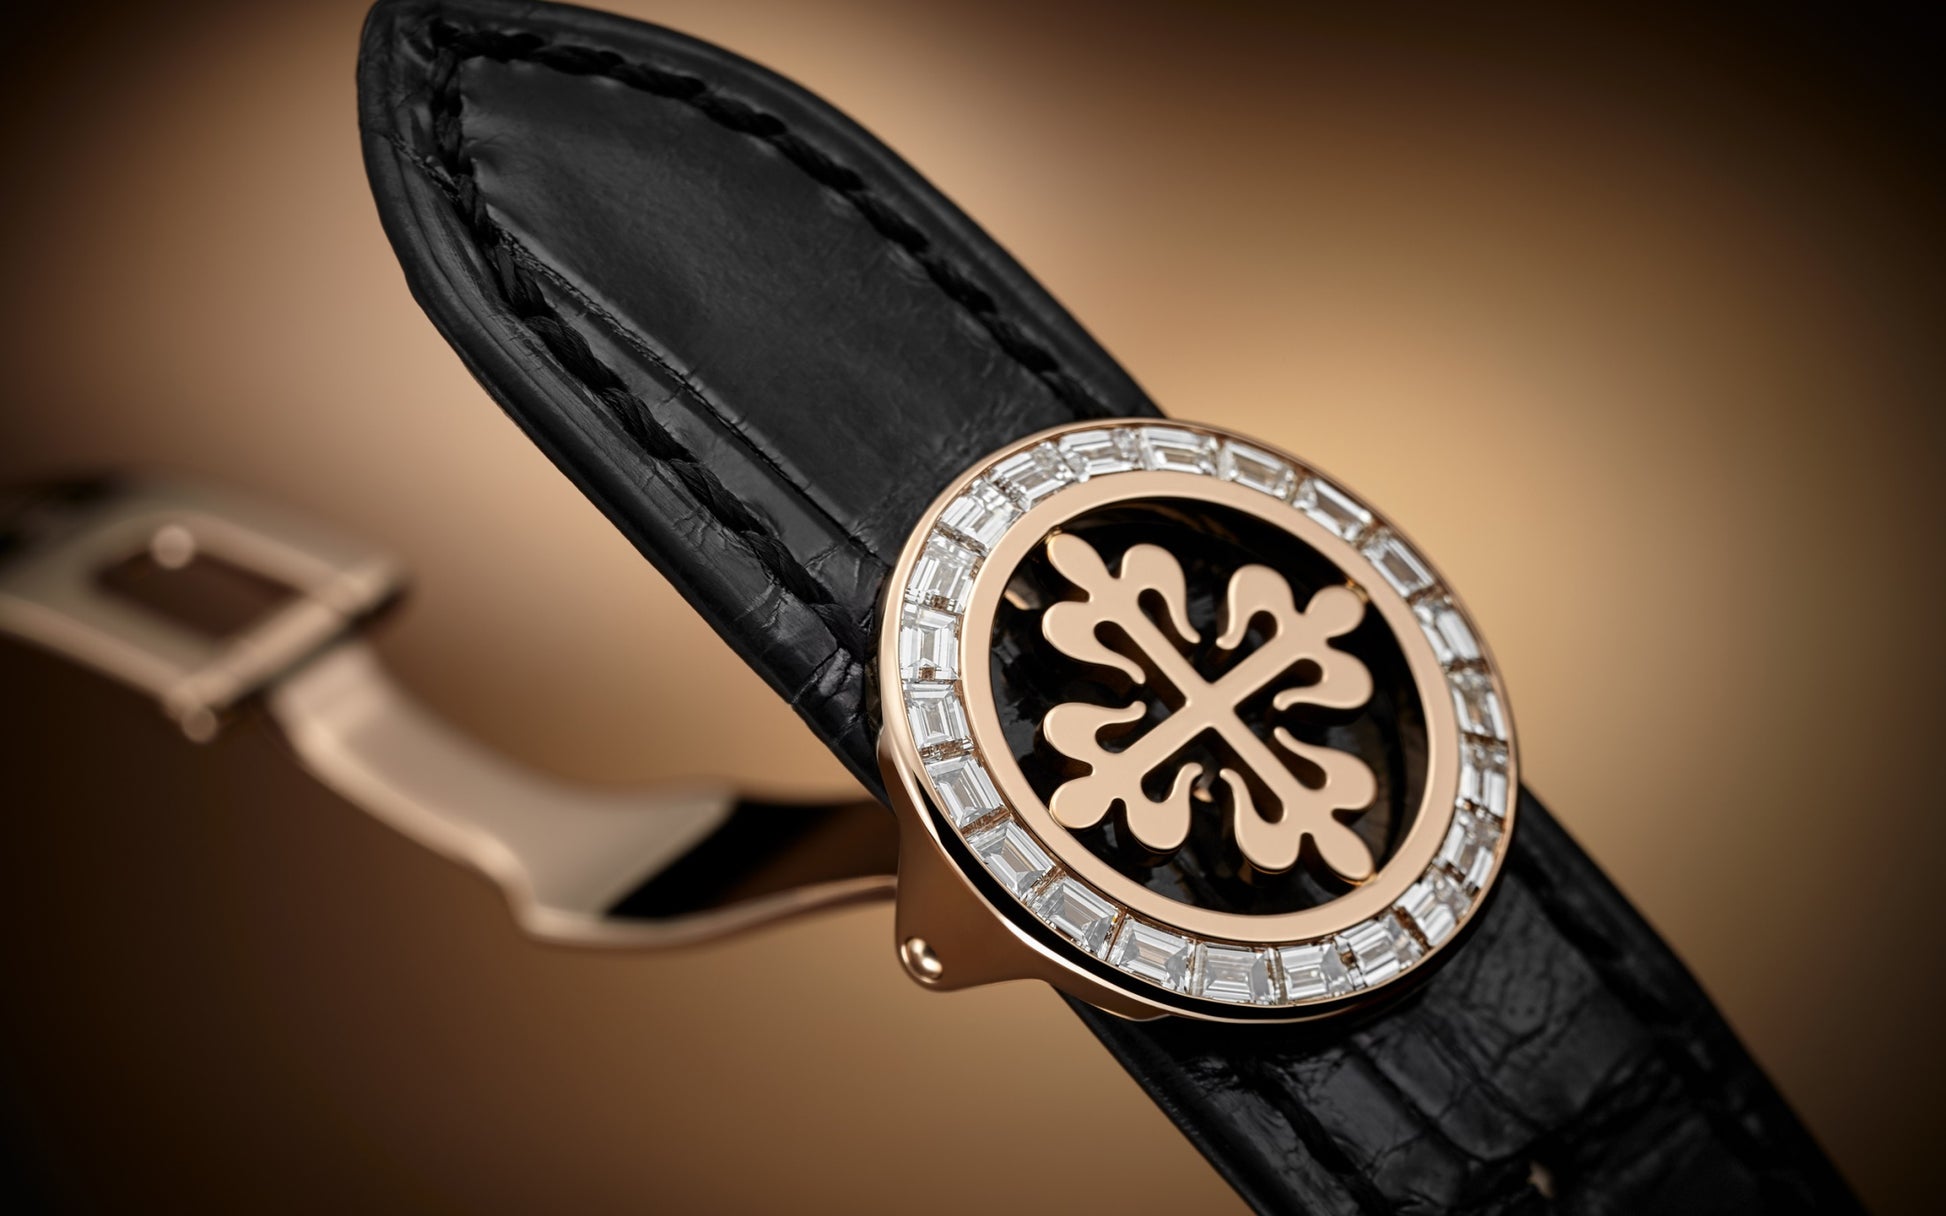 Patek Philippe Grand Complication, 18k Rose Gold set with baguette diamonds, 43mm, Ref# 5304/301R-001, Clasp